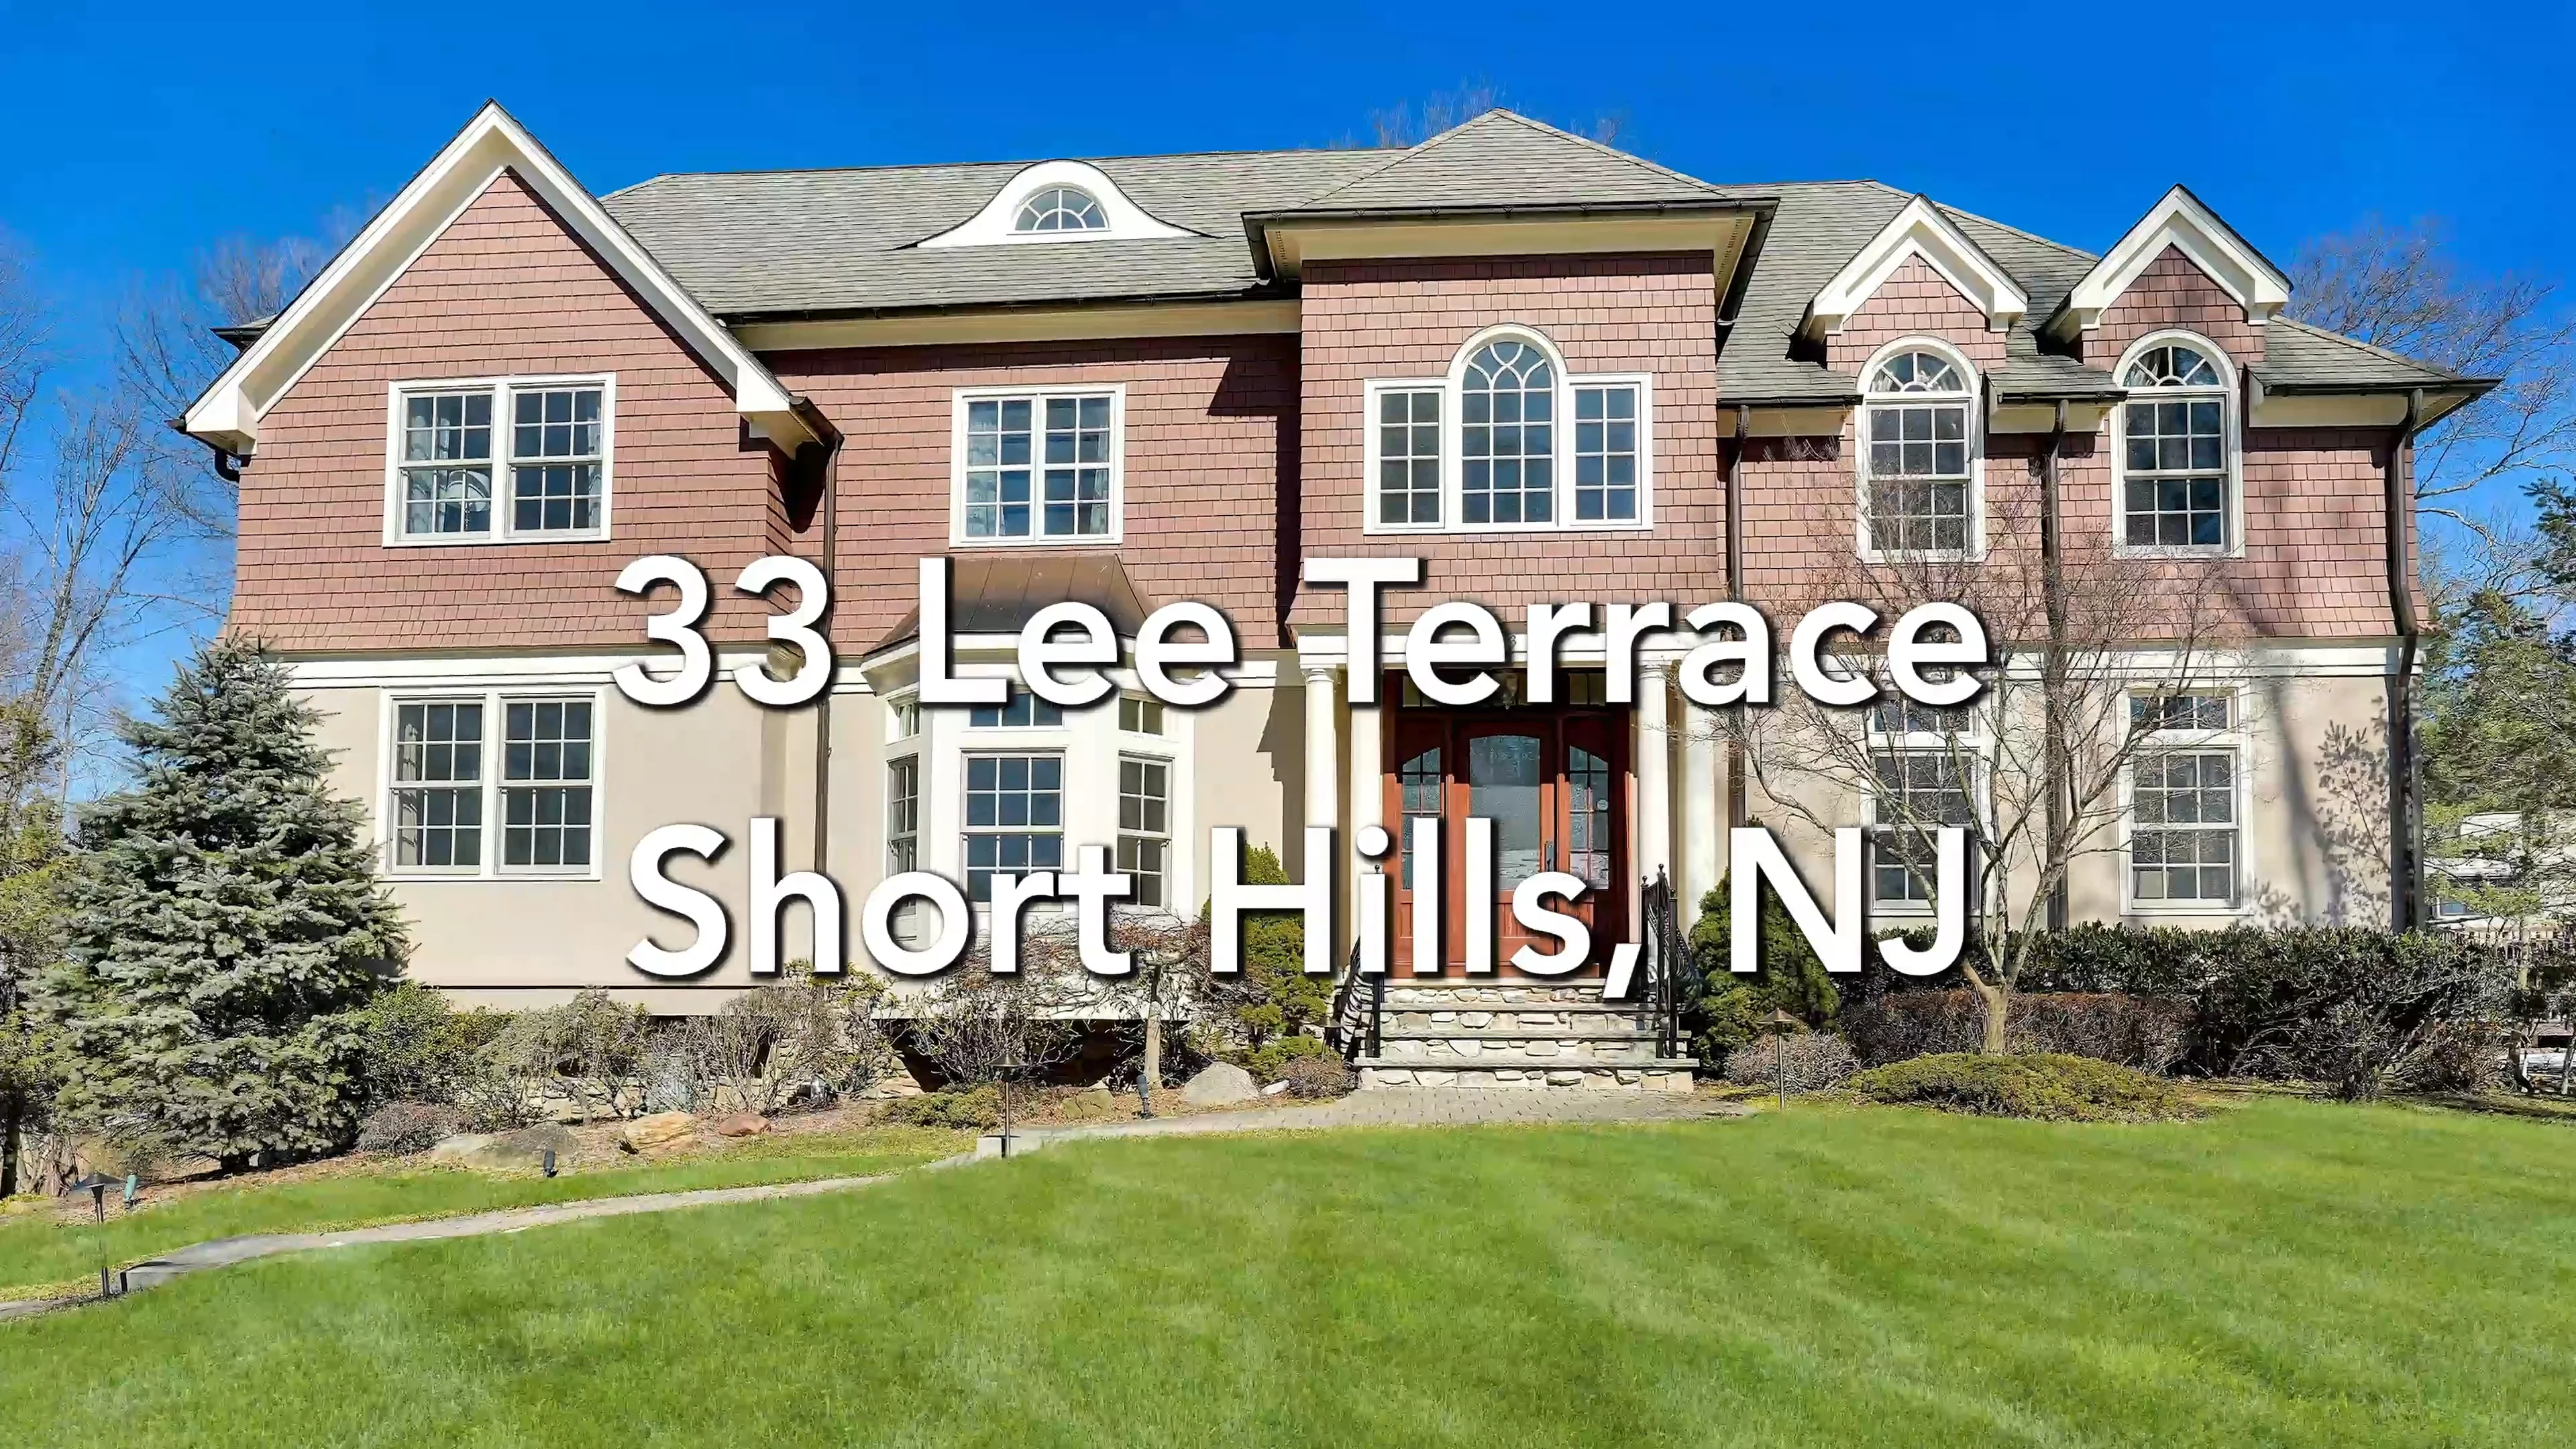 33 Lee Terrace Short Hills, NJ on Vimeo